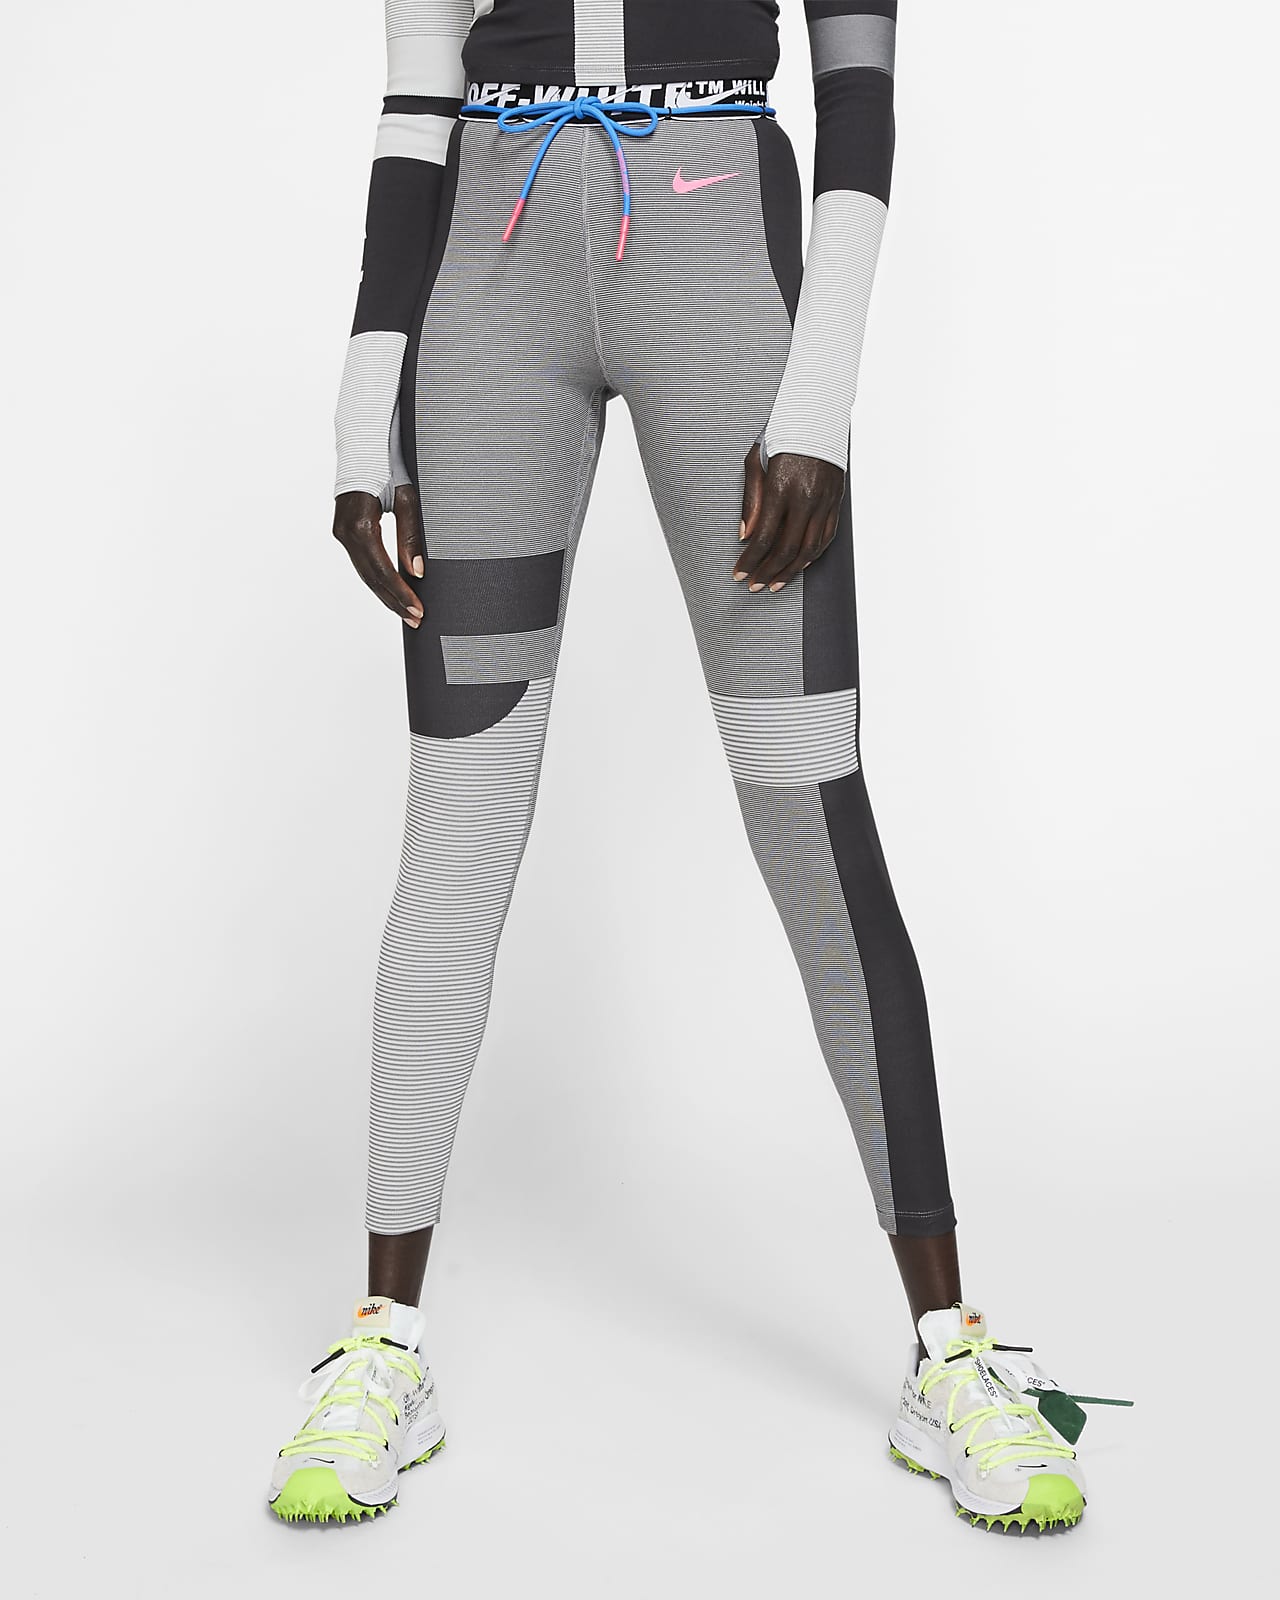 Women's Running Tights. Nike SG